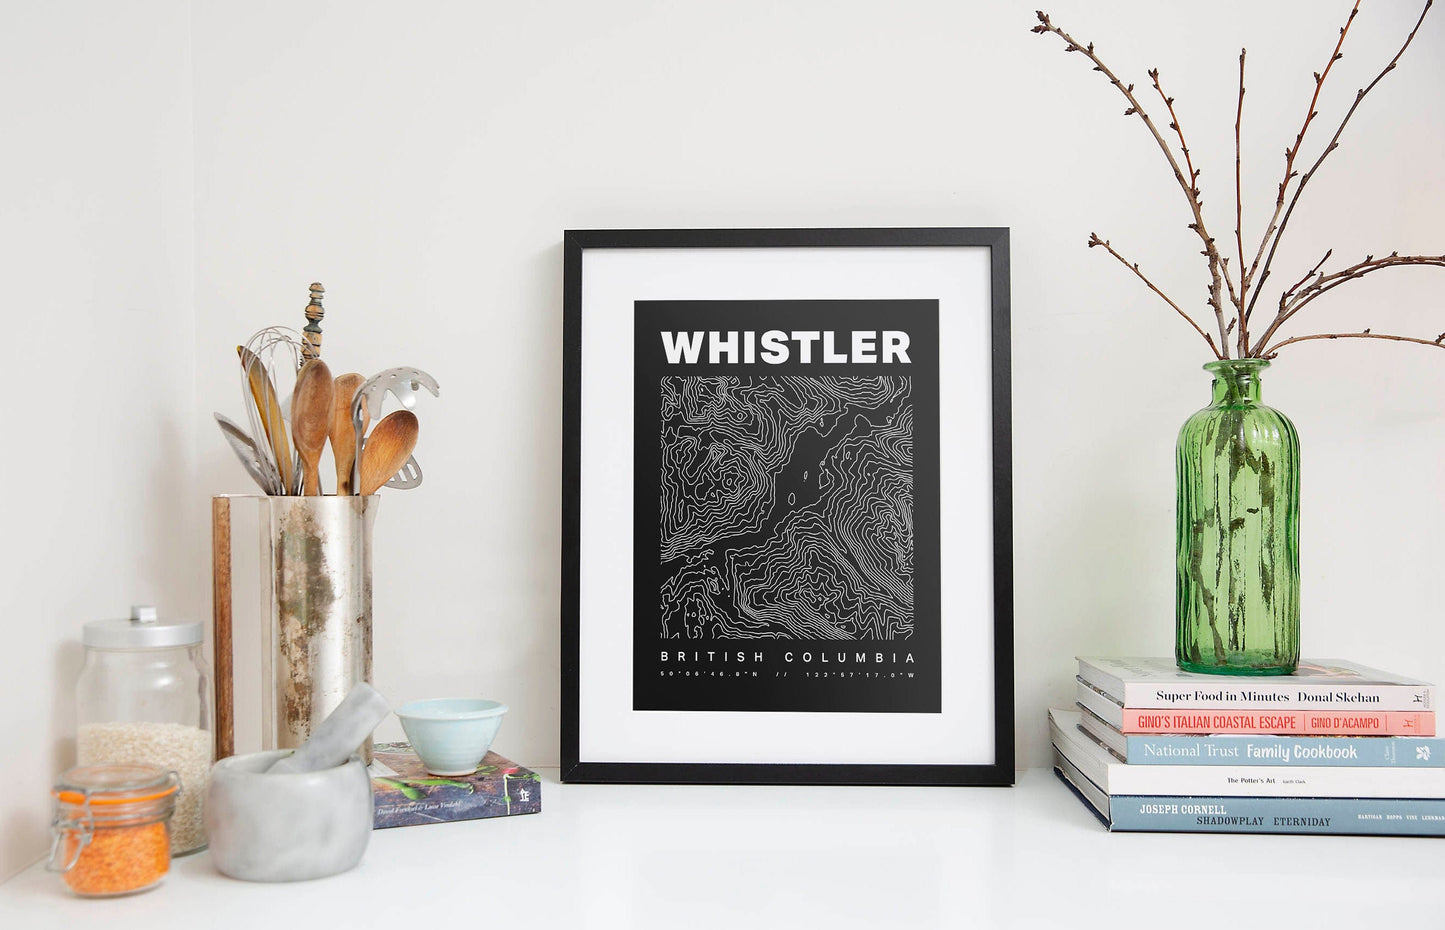 Whistler Contours Kunstdruck